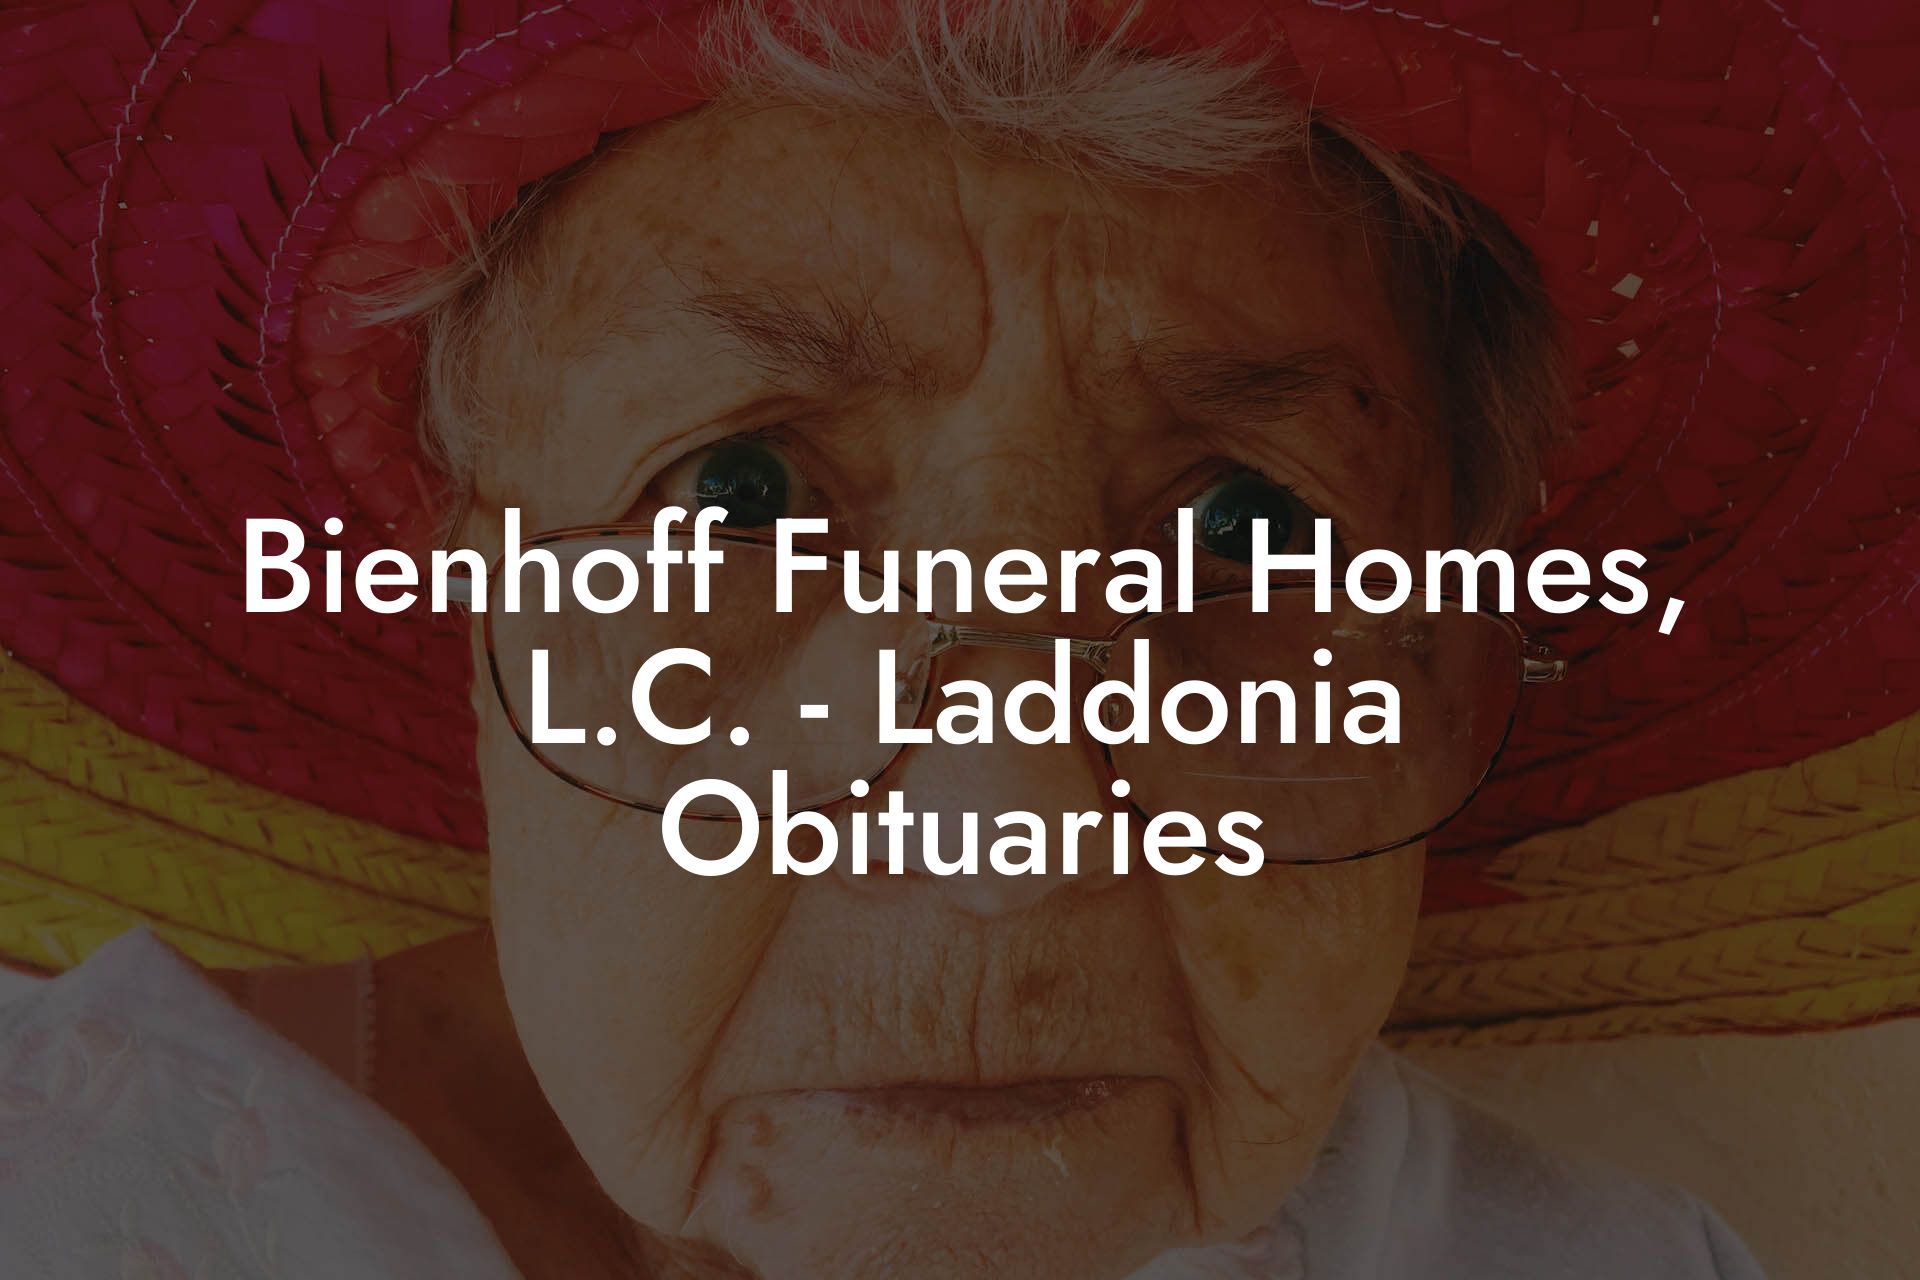 Bienhoff Funeral Homes, L.C. - Laddonia Obituaries